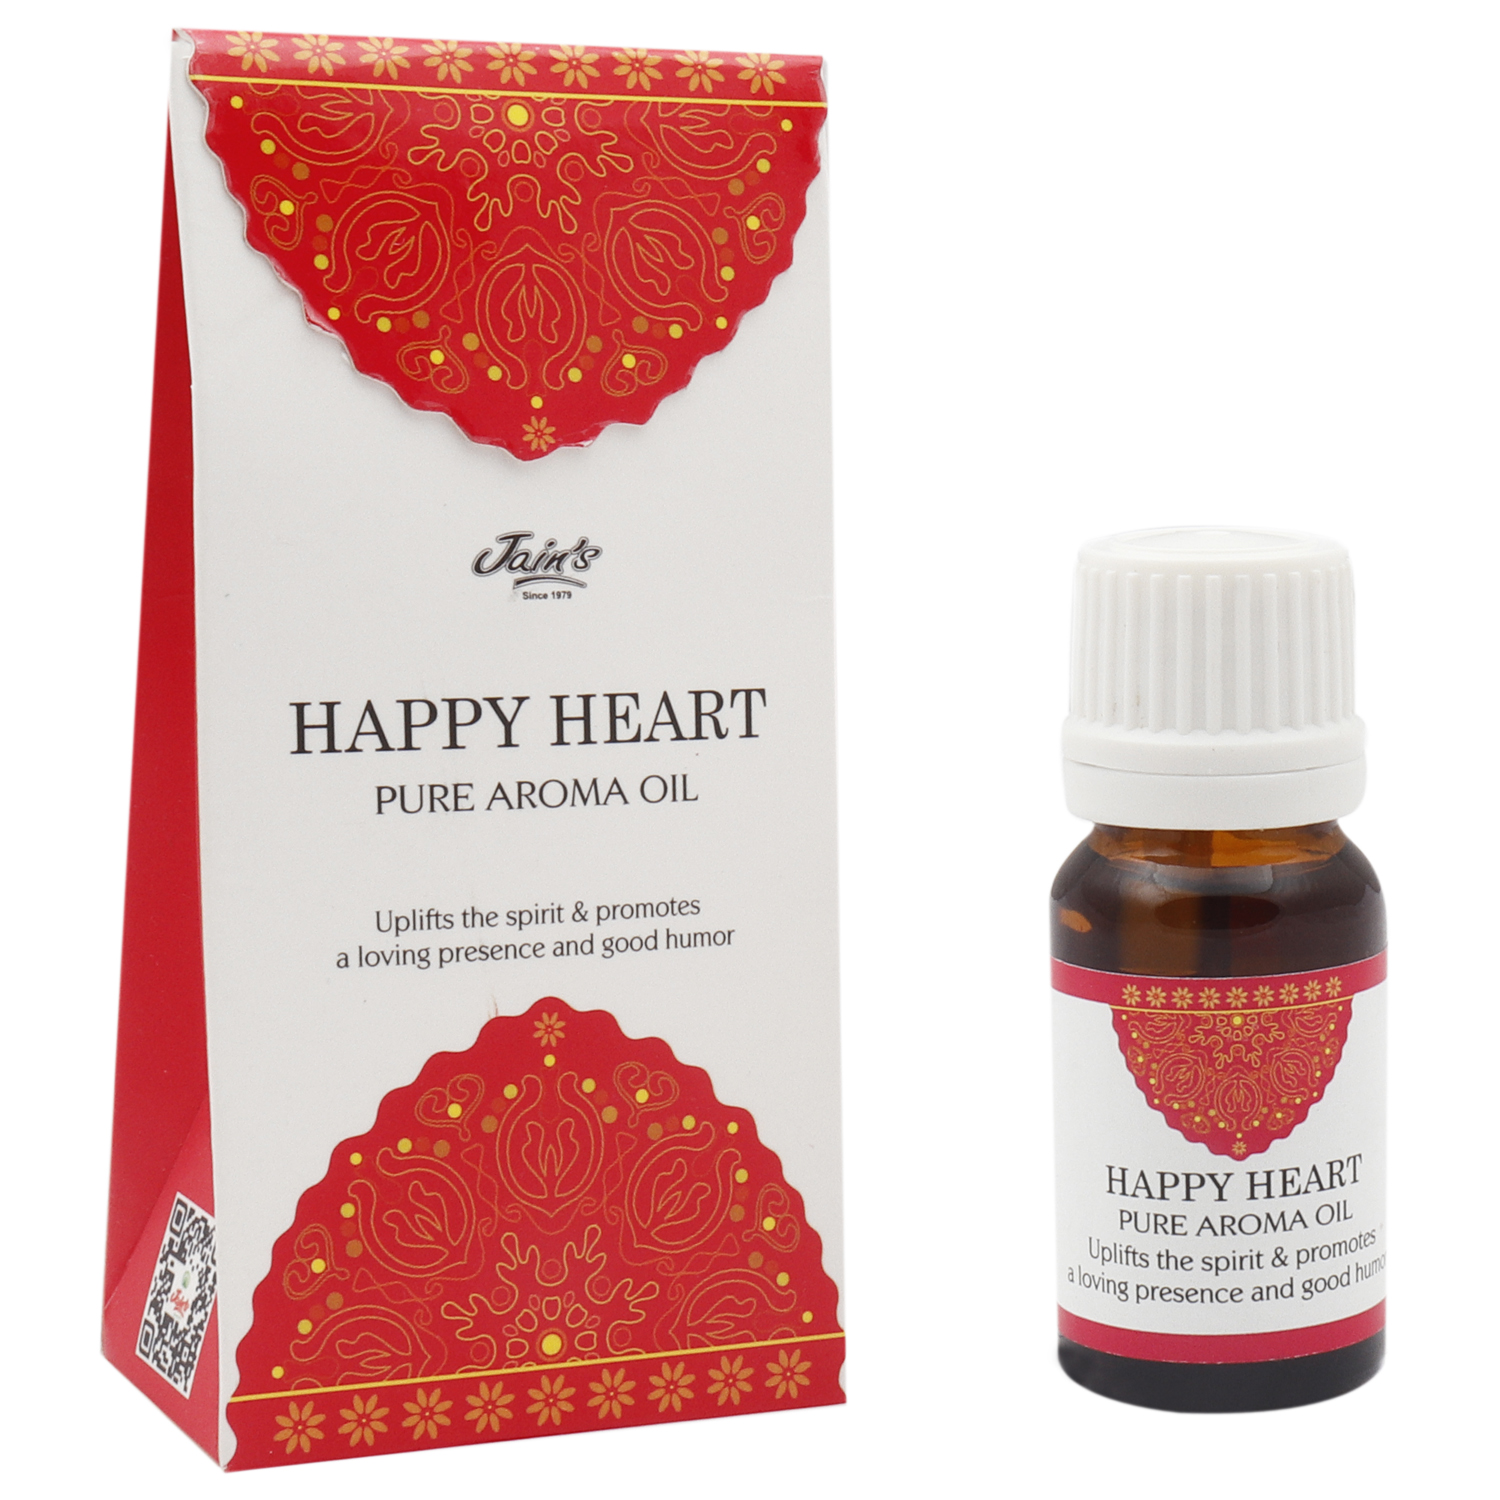 Jain's Happy Heart Aroma Oil / Diffuser Oil